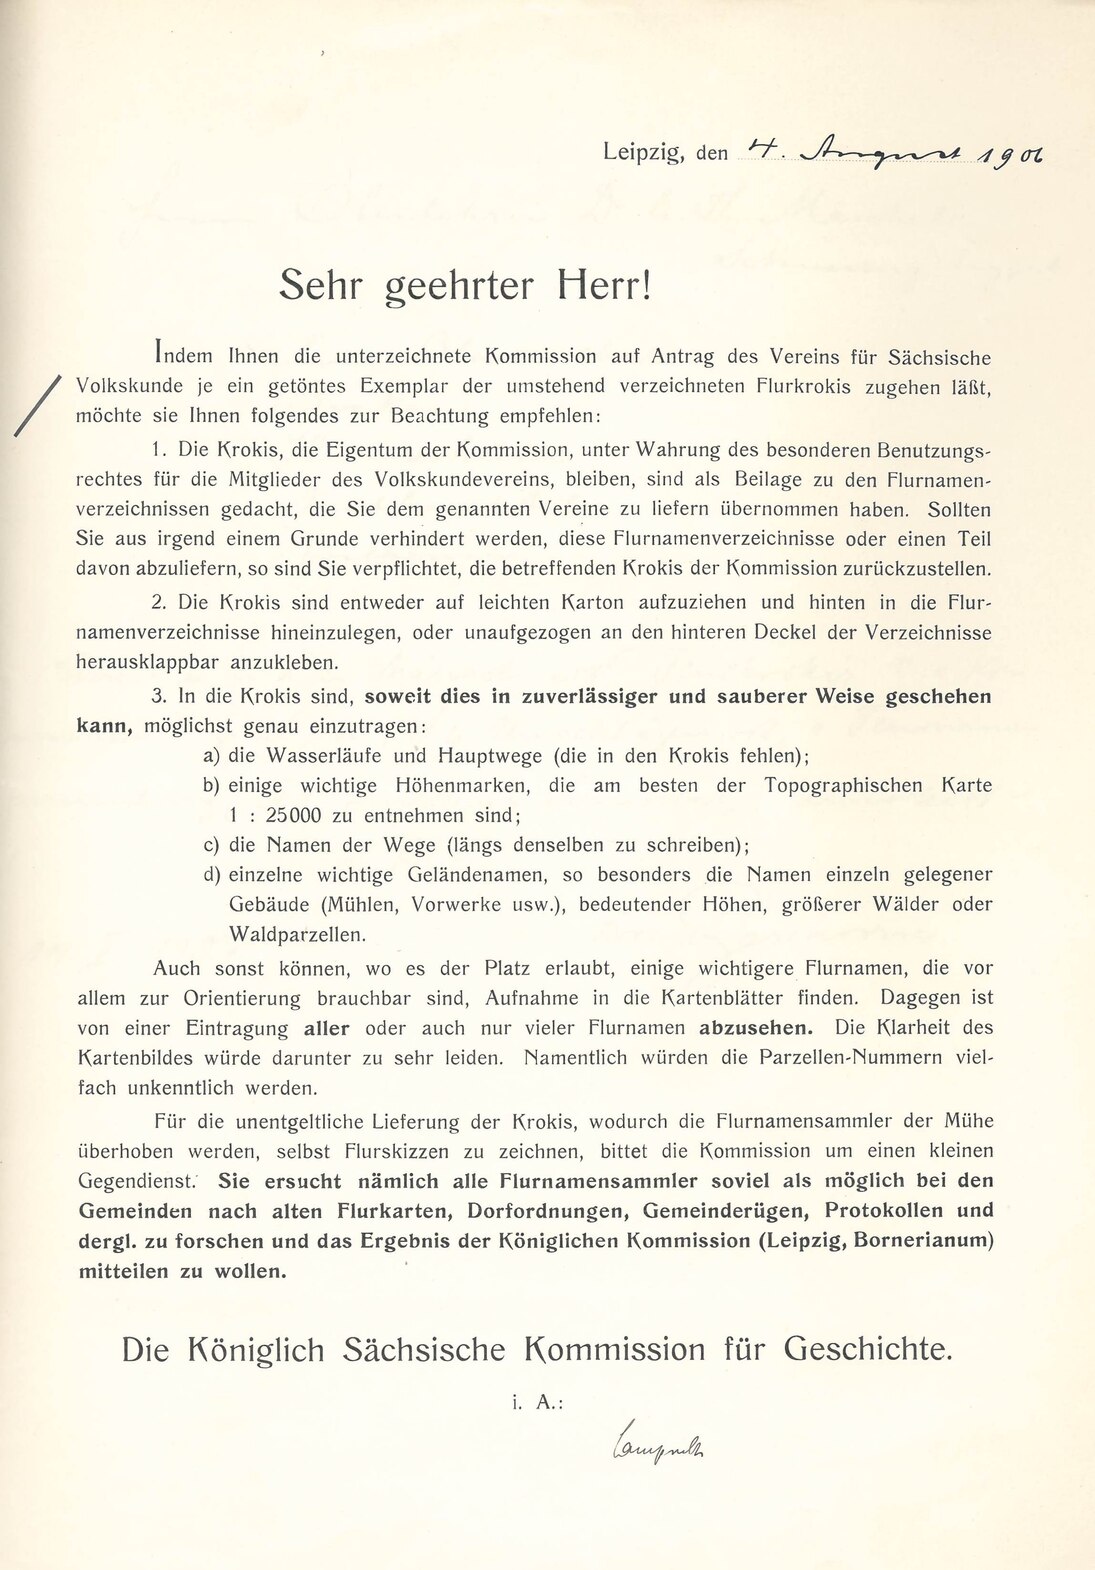 Versendung von Flurkrokis-Kopien an sächsische Flurnamensammler, 1906